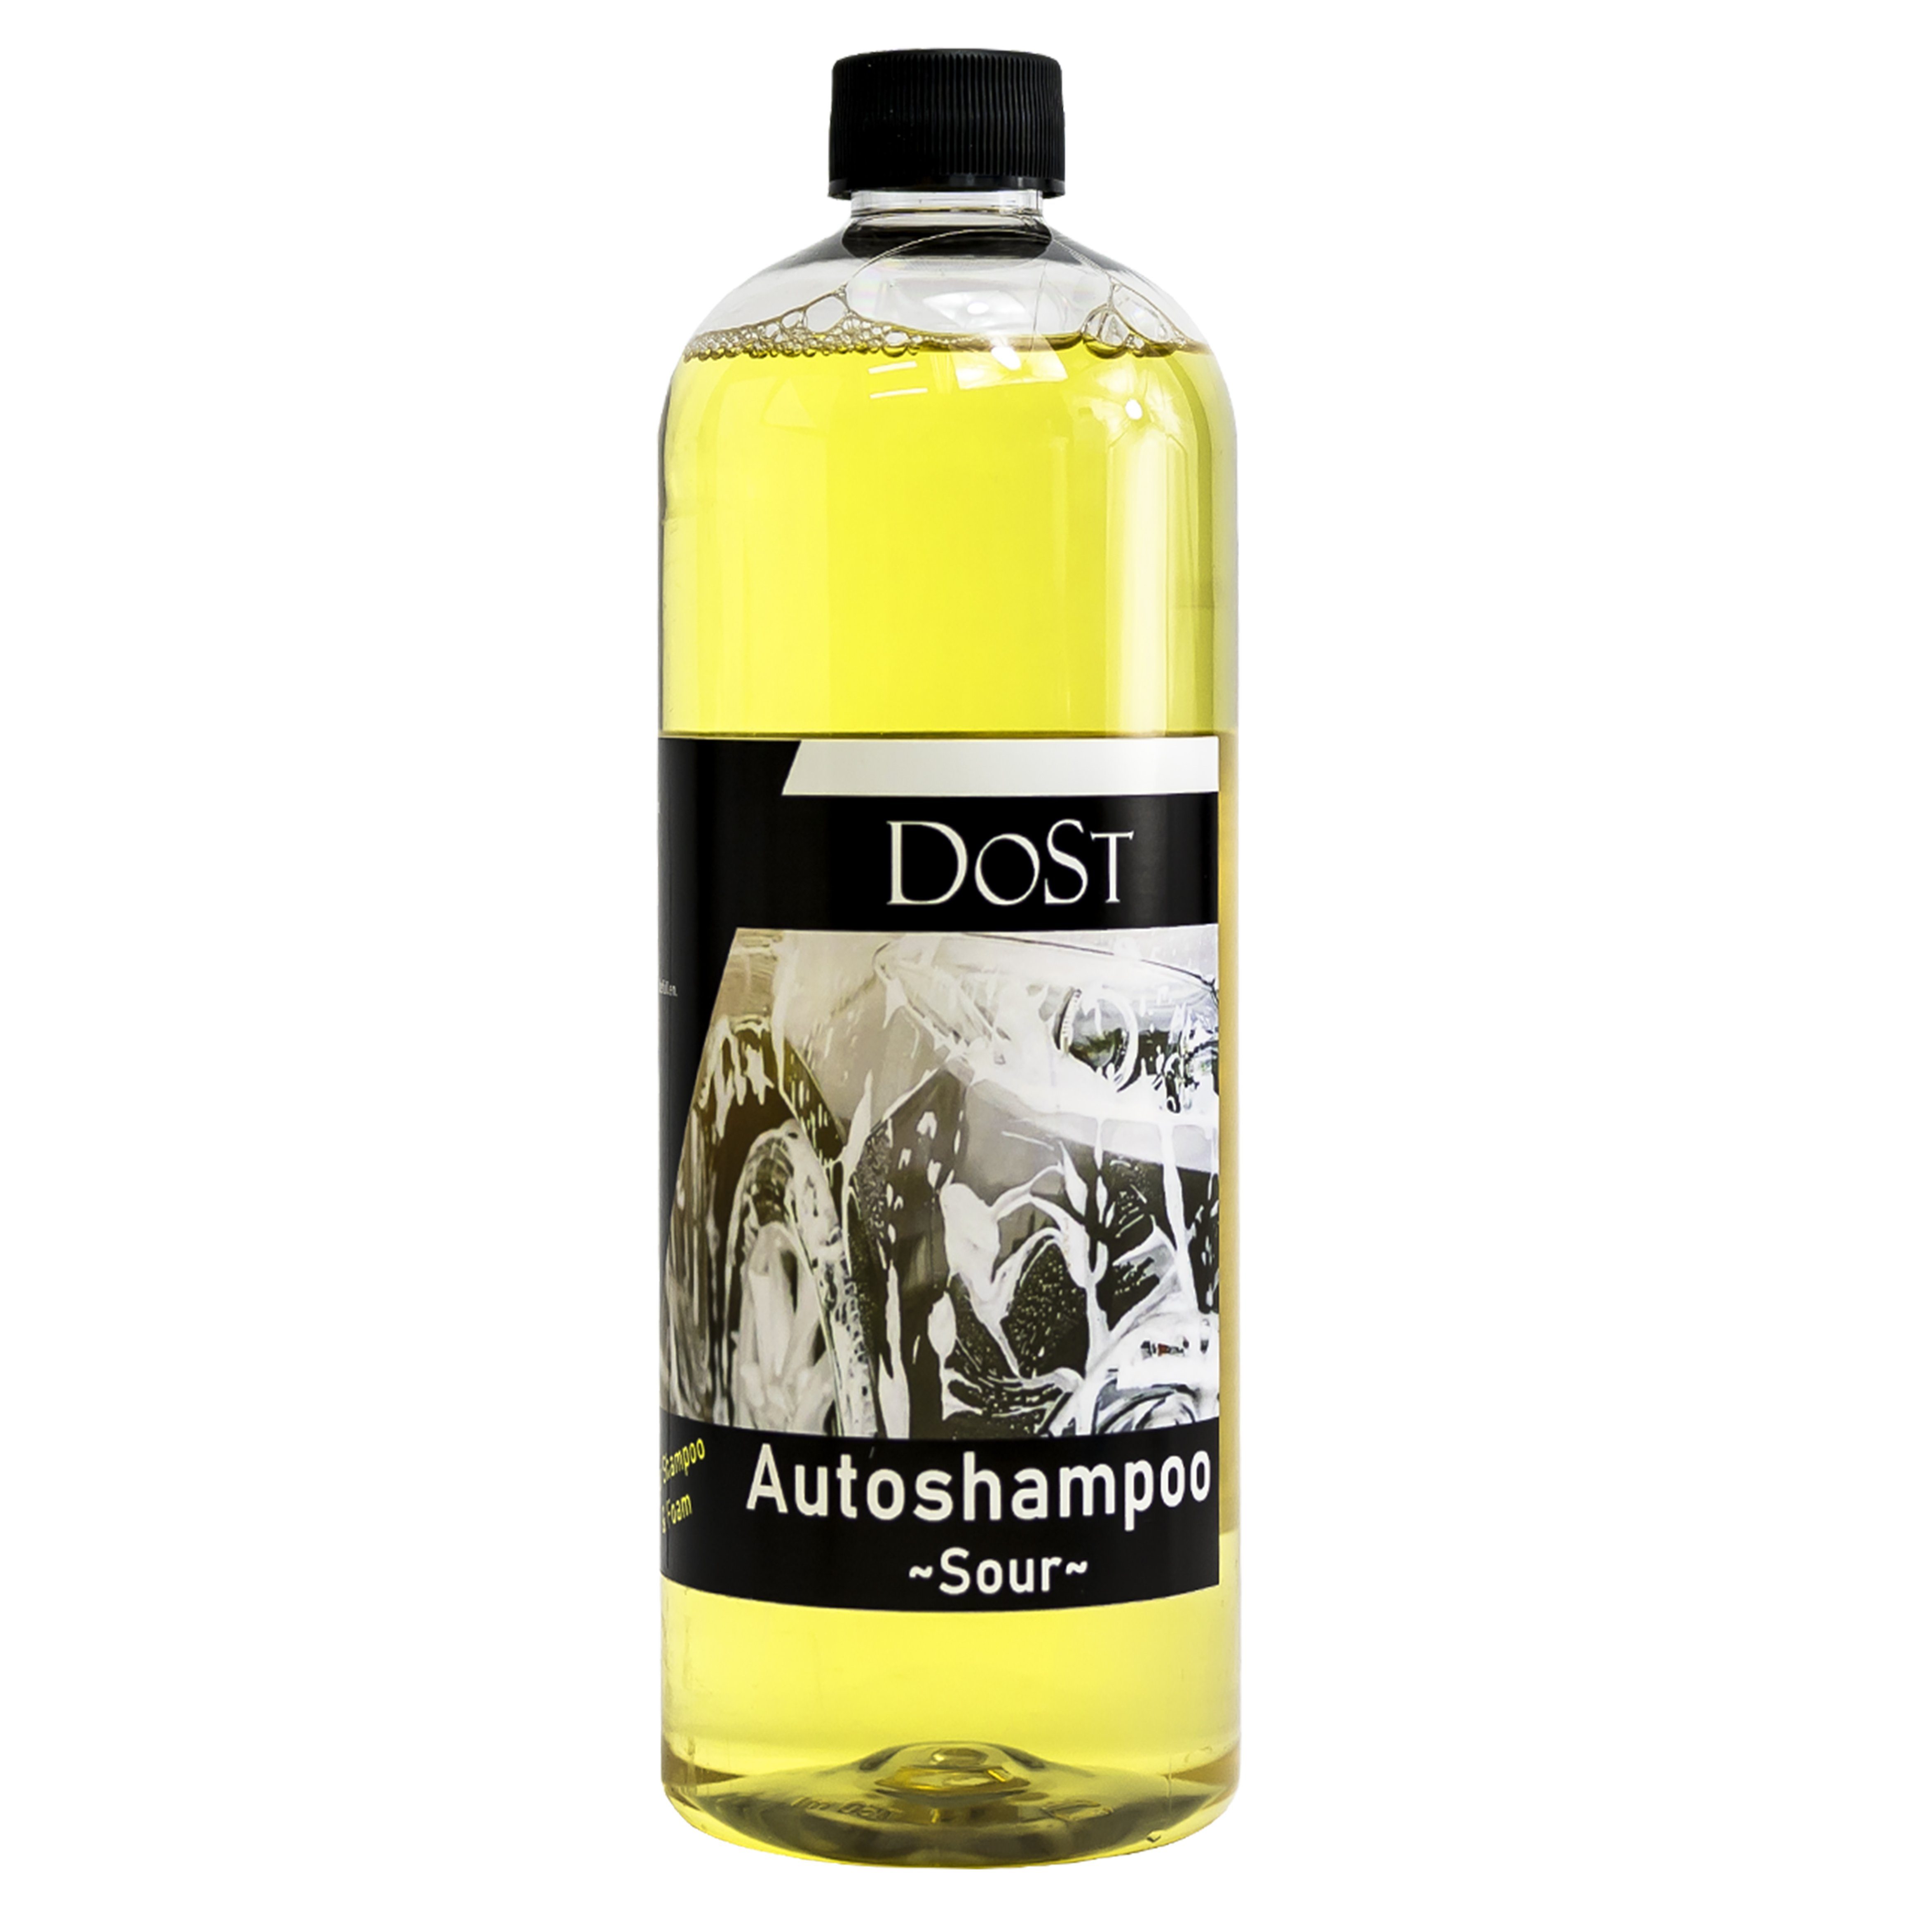 ~Sour~ Fahrzeuge / Autoshampoo alle DOST für Shampoo